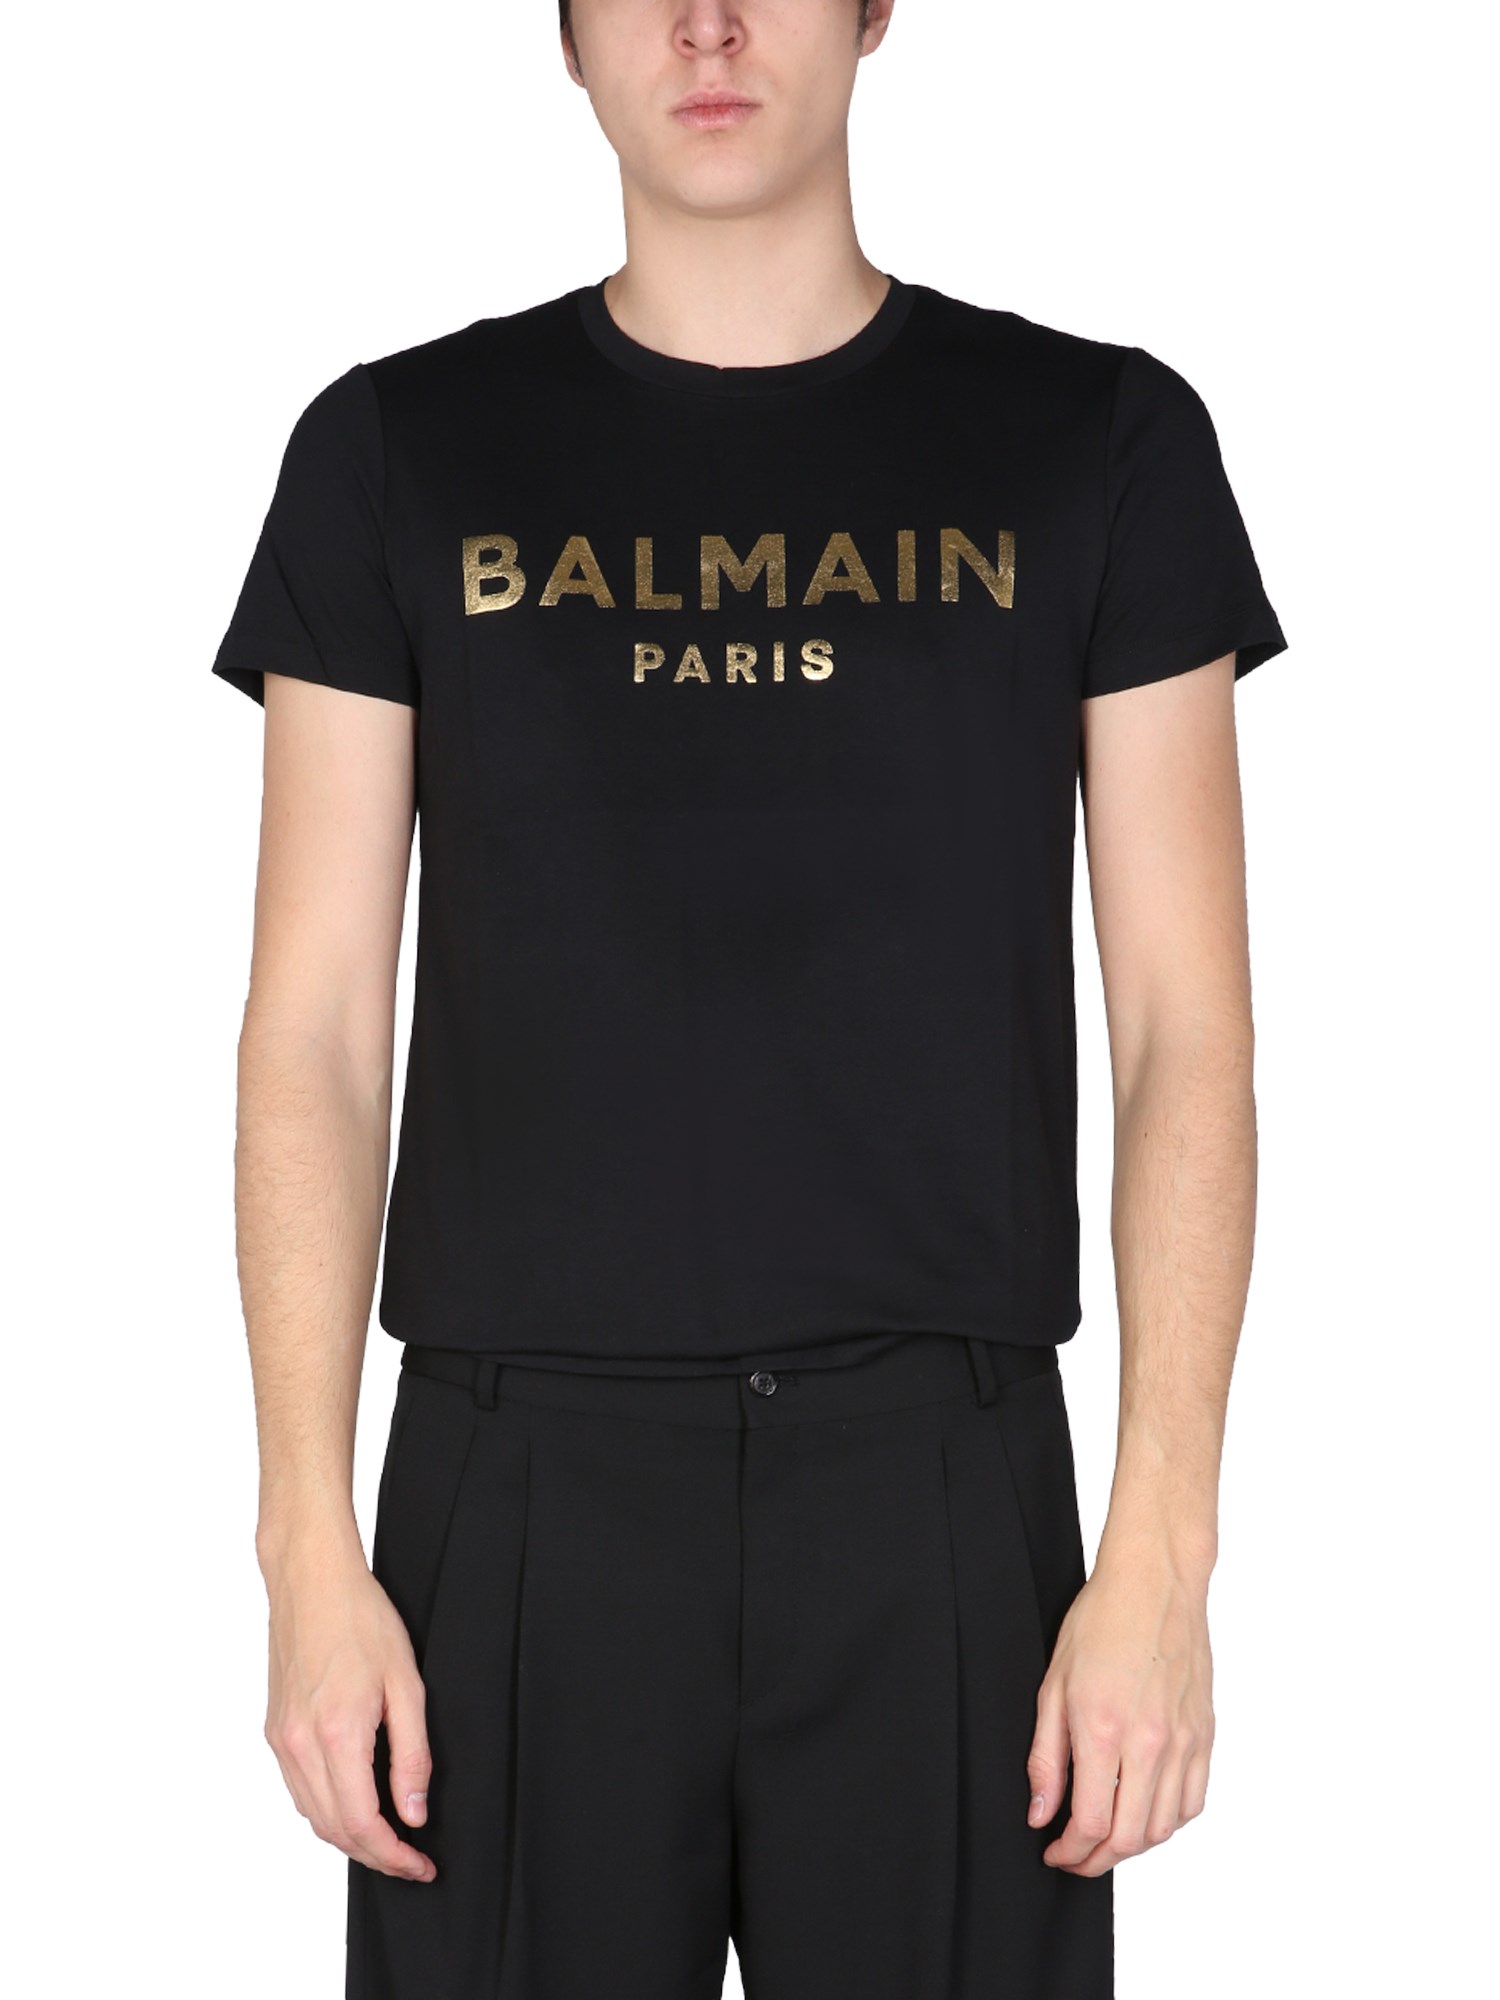 balmain t-shirt with laminated logo